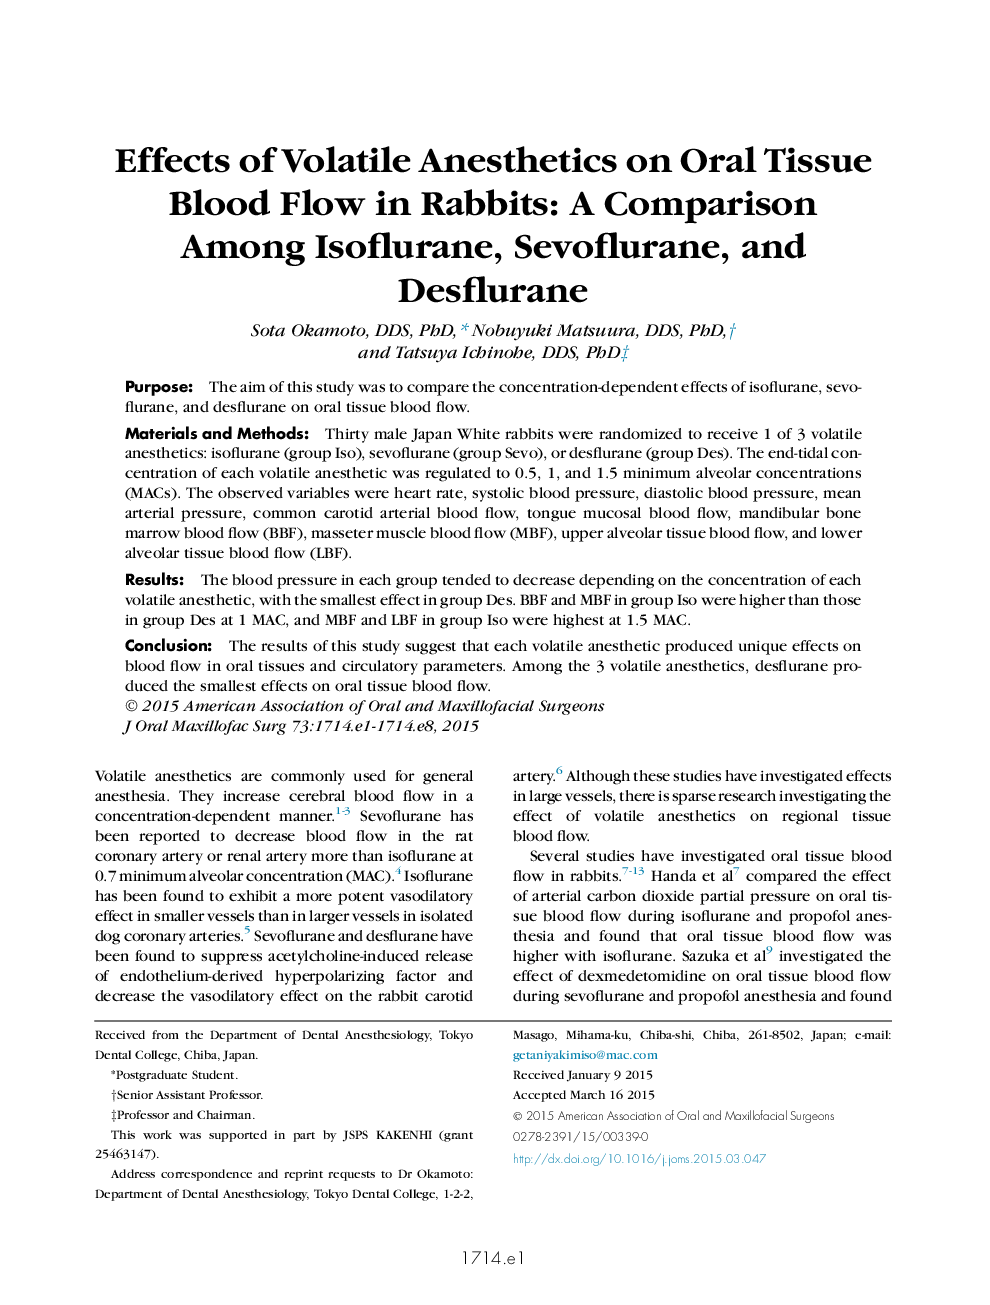 Effects of Volatile Anesthetics on Oral Tissue Blood Flow in Rabbits: A Comparison Among Isoflurane, Sevoflurane, and Desflurane